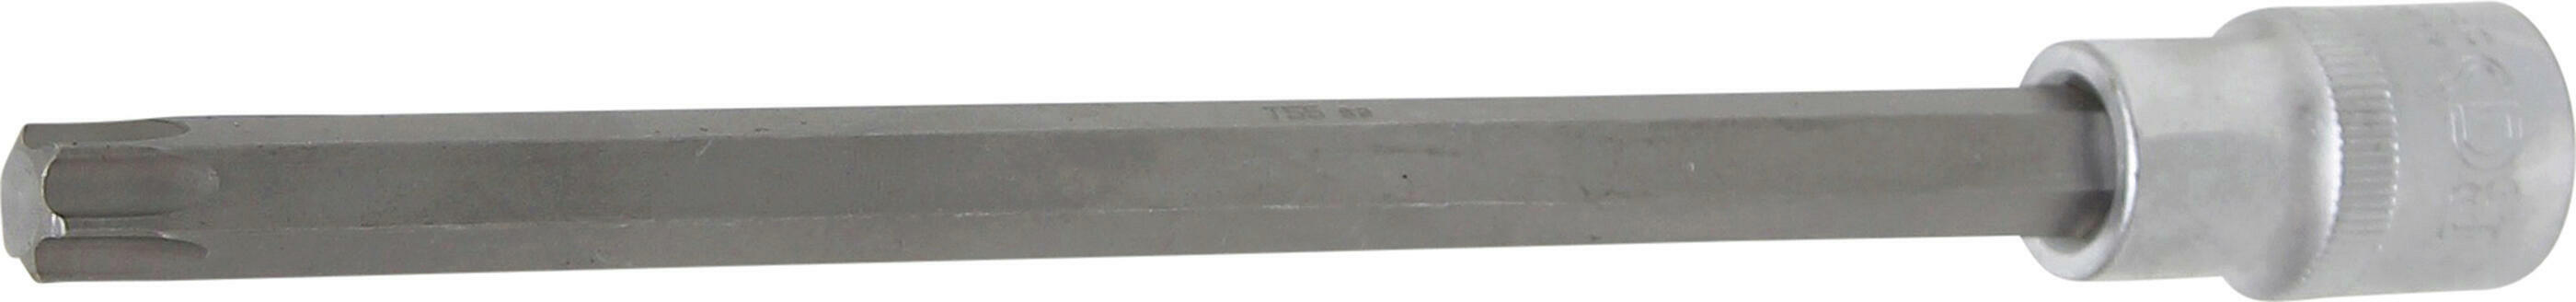 Bit-Einsatz | Länge 200 mm | Antrieb Innenvierkant 12,5 mm (1/2") | T-Profil (für Torx) T55